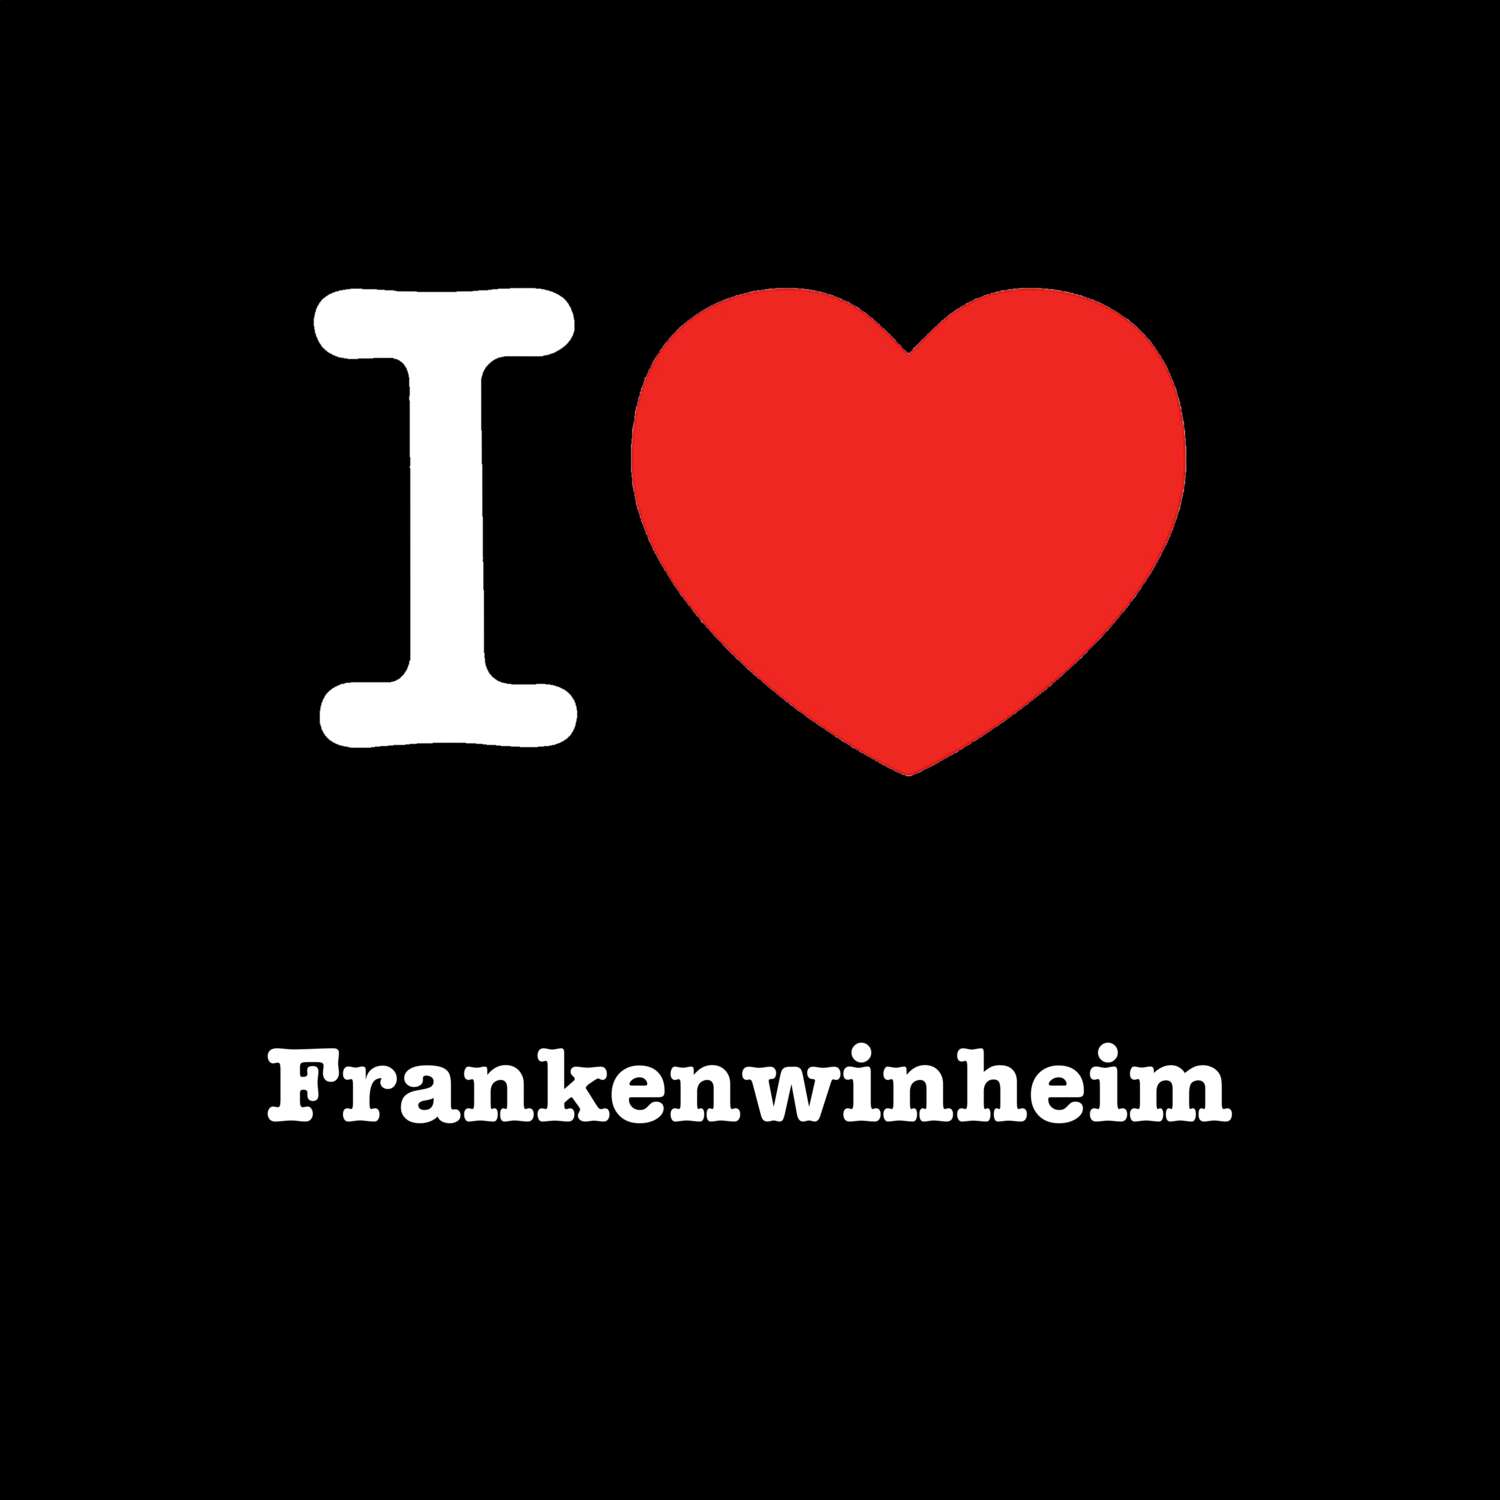 Frankenwinheim T-Shirt »I love«